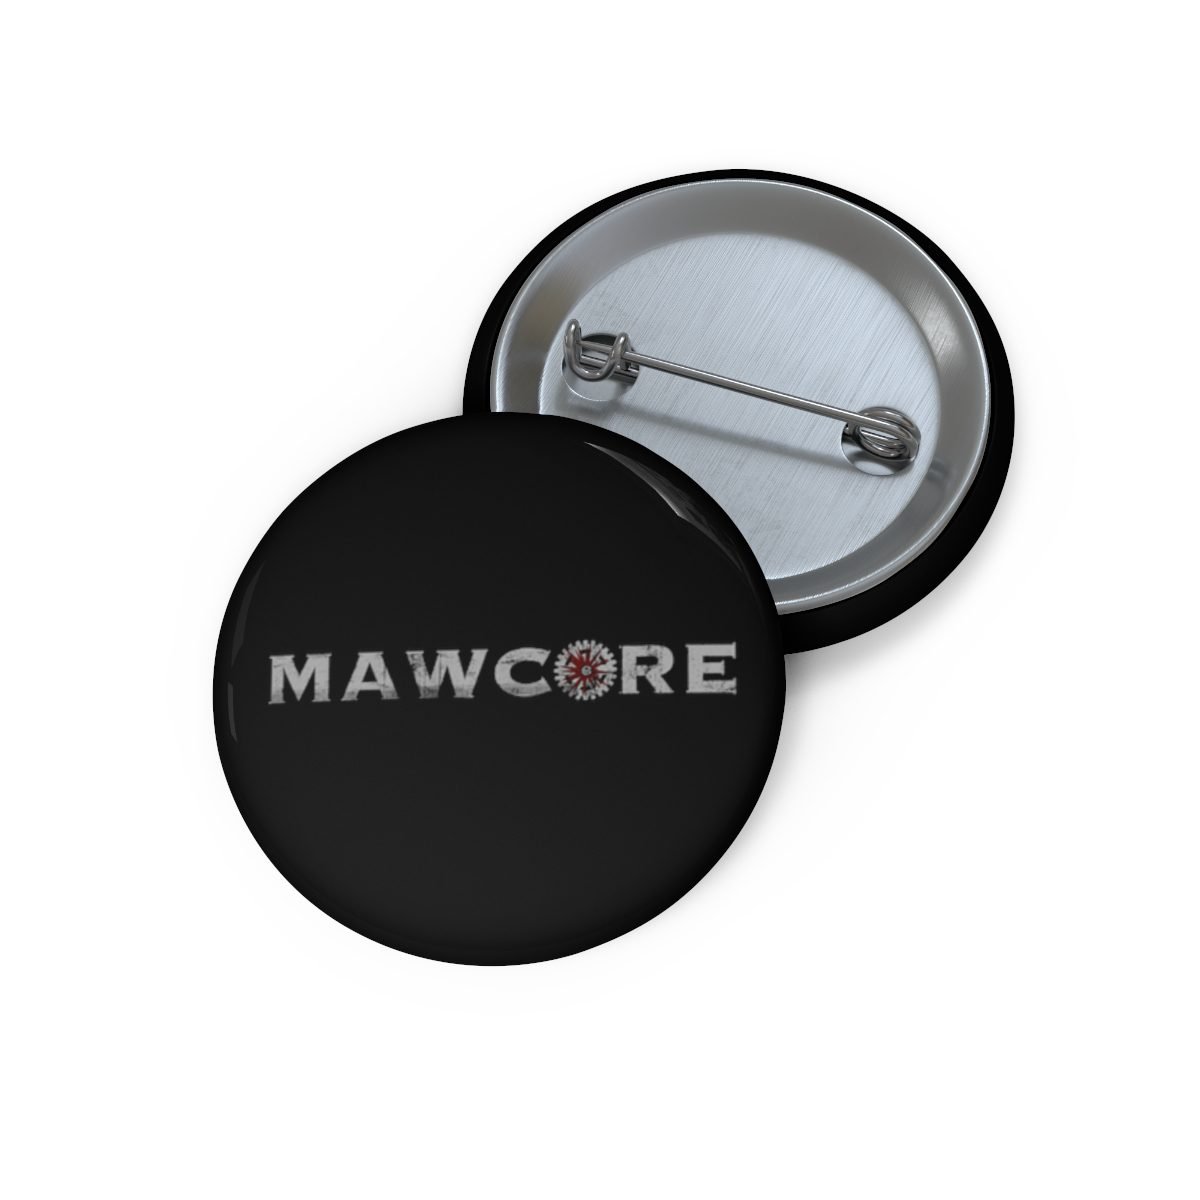 Mawcore Grunge Logo Pin Buttons